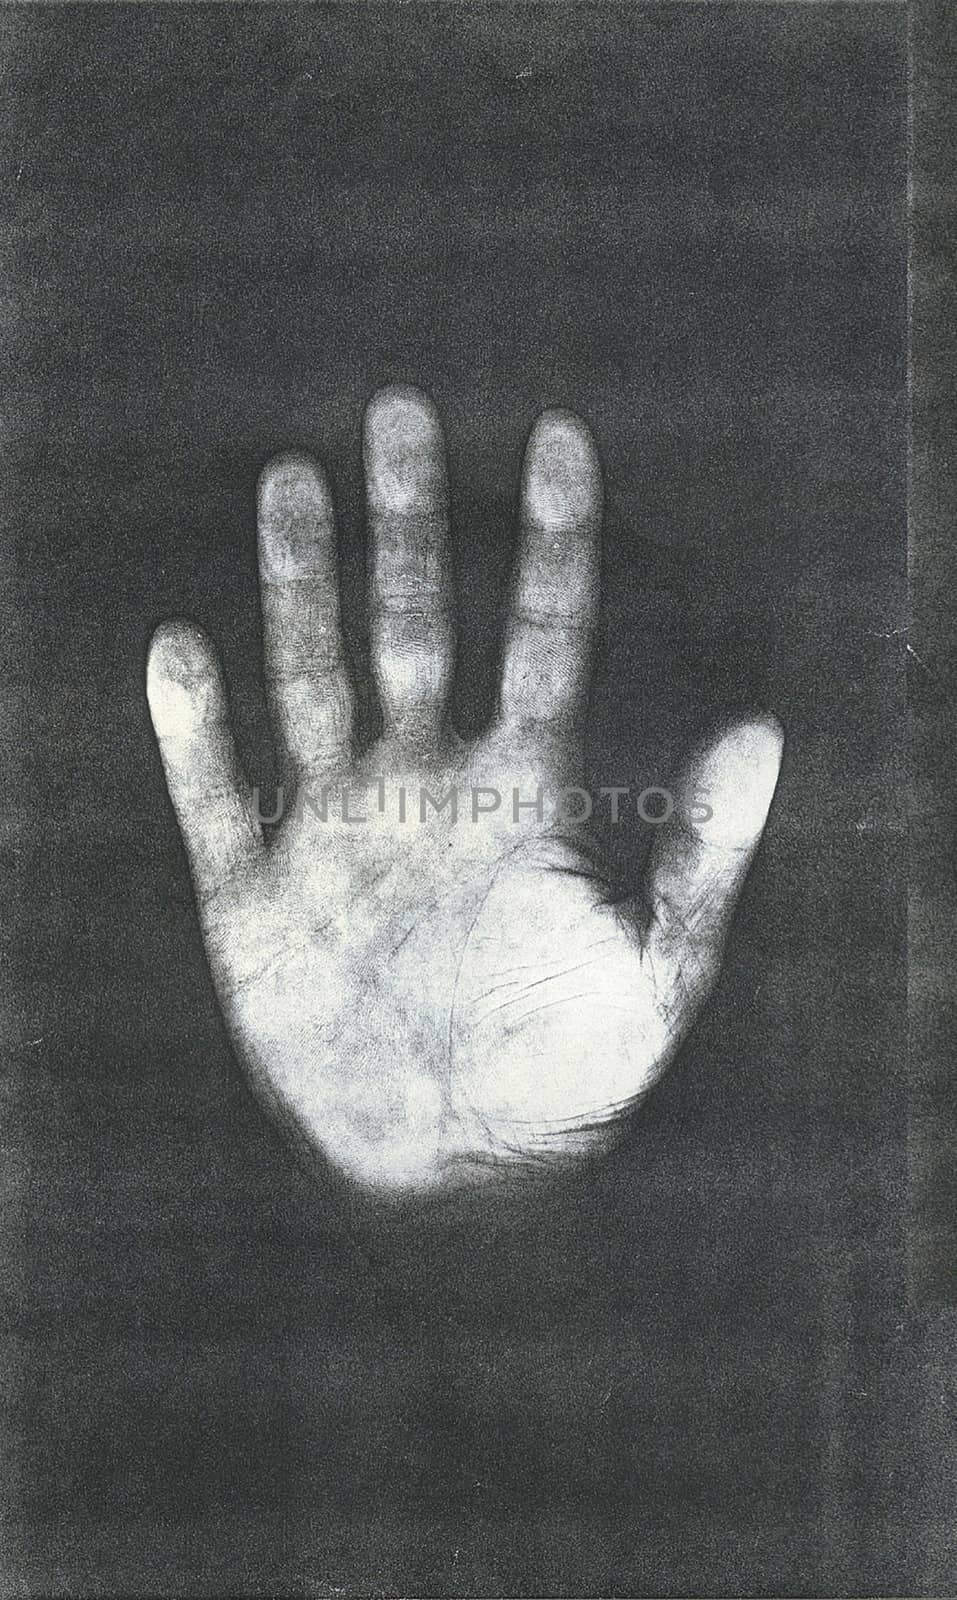 Black and white image. Human handprint